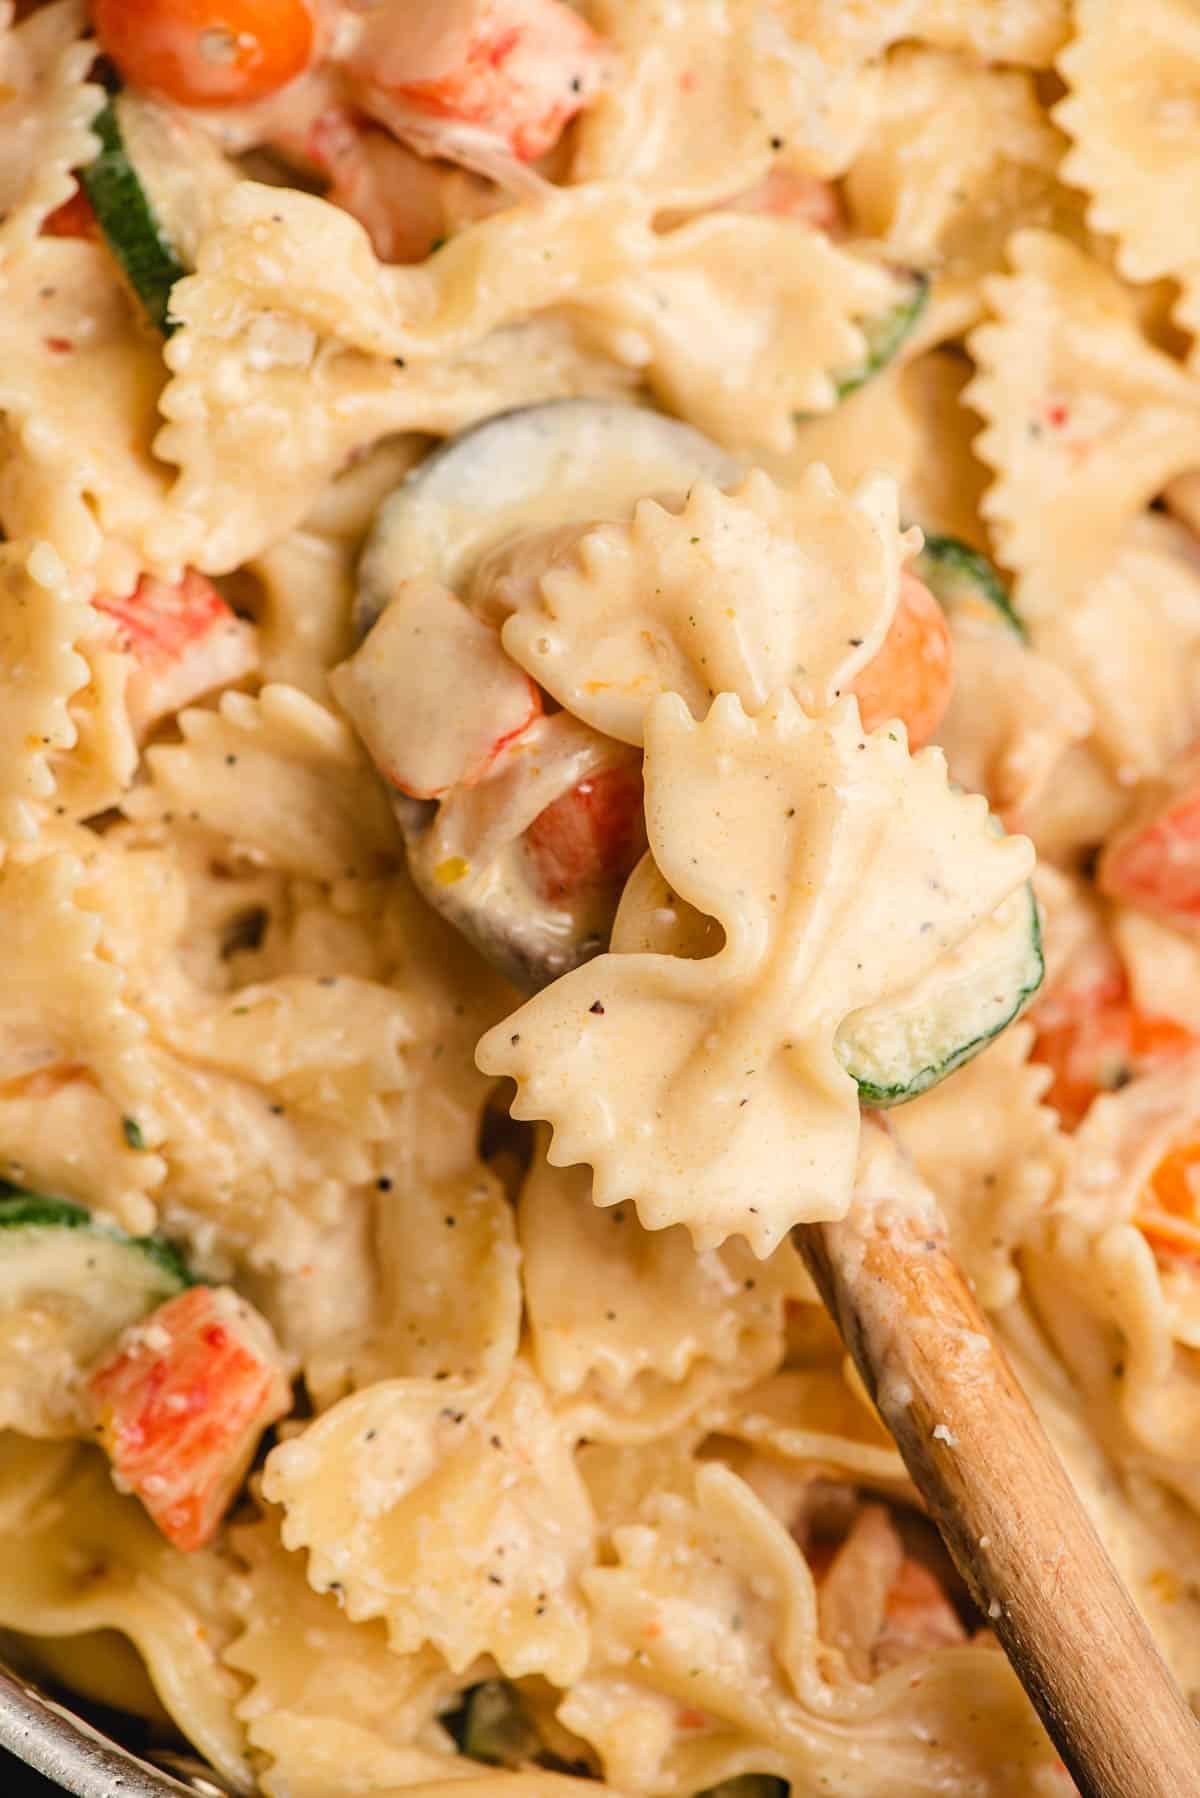 Creamy bowtie pasta with zucchini, crab, and cherry tomatoes.